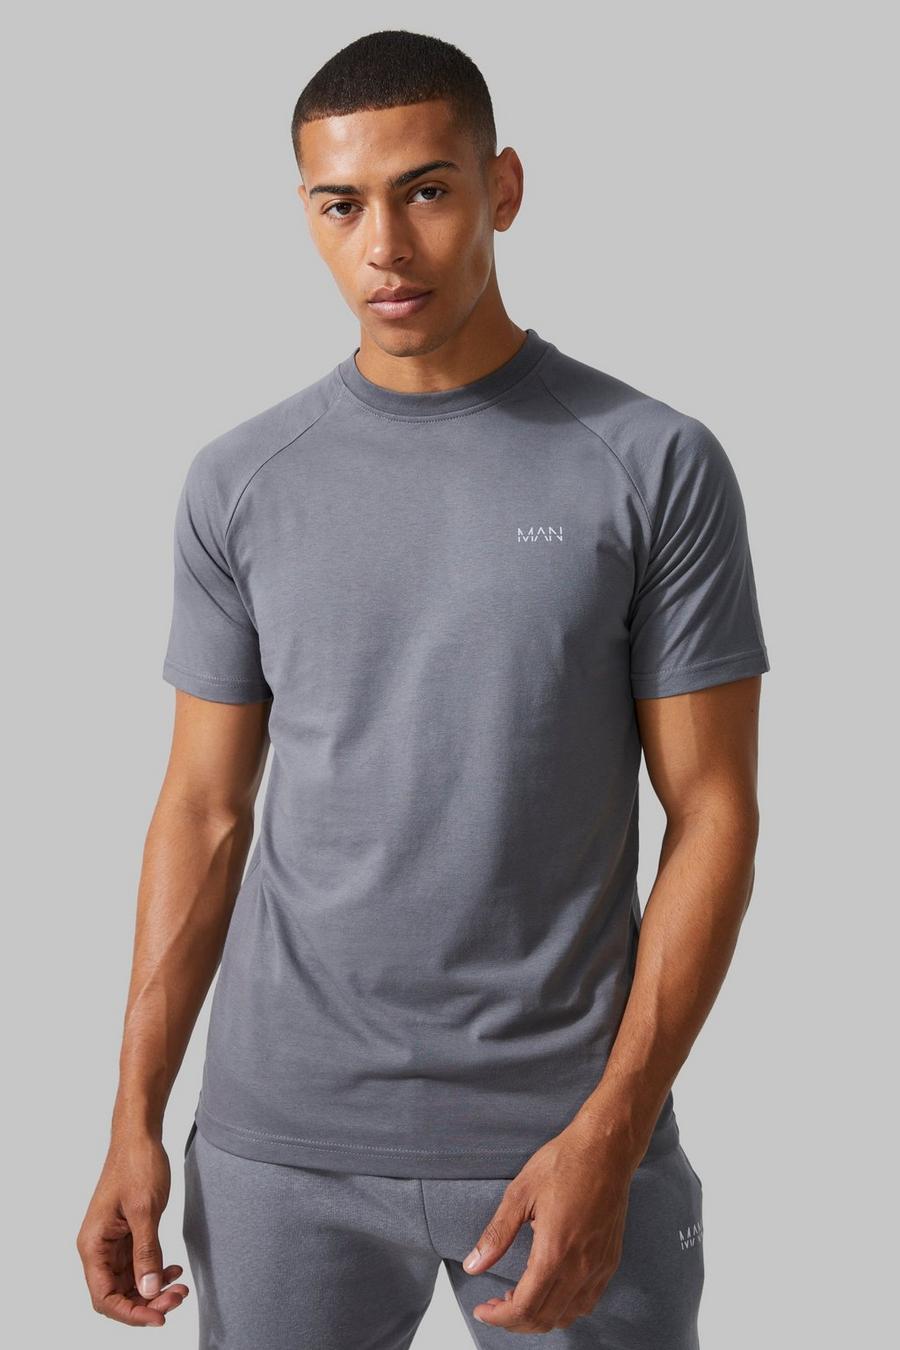 Charcoal grey Man Active Gym Raglan T-shirt